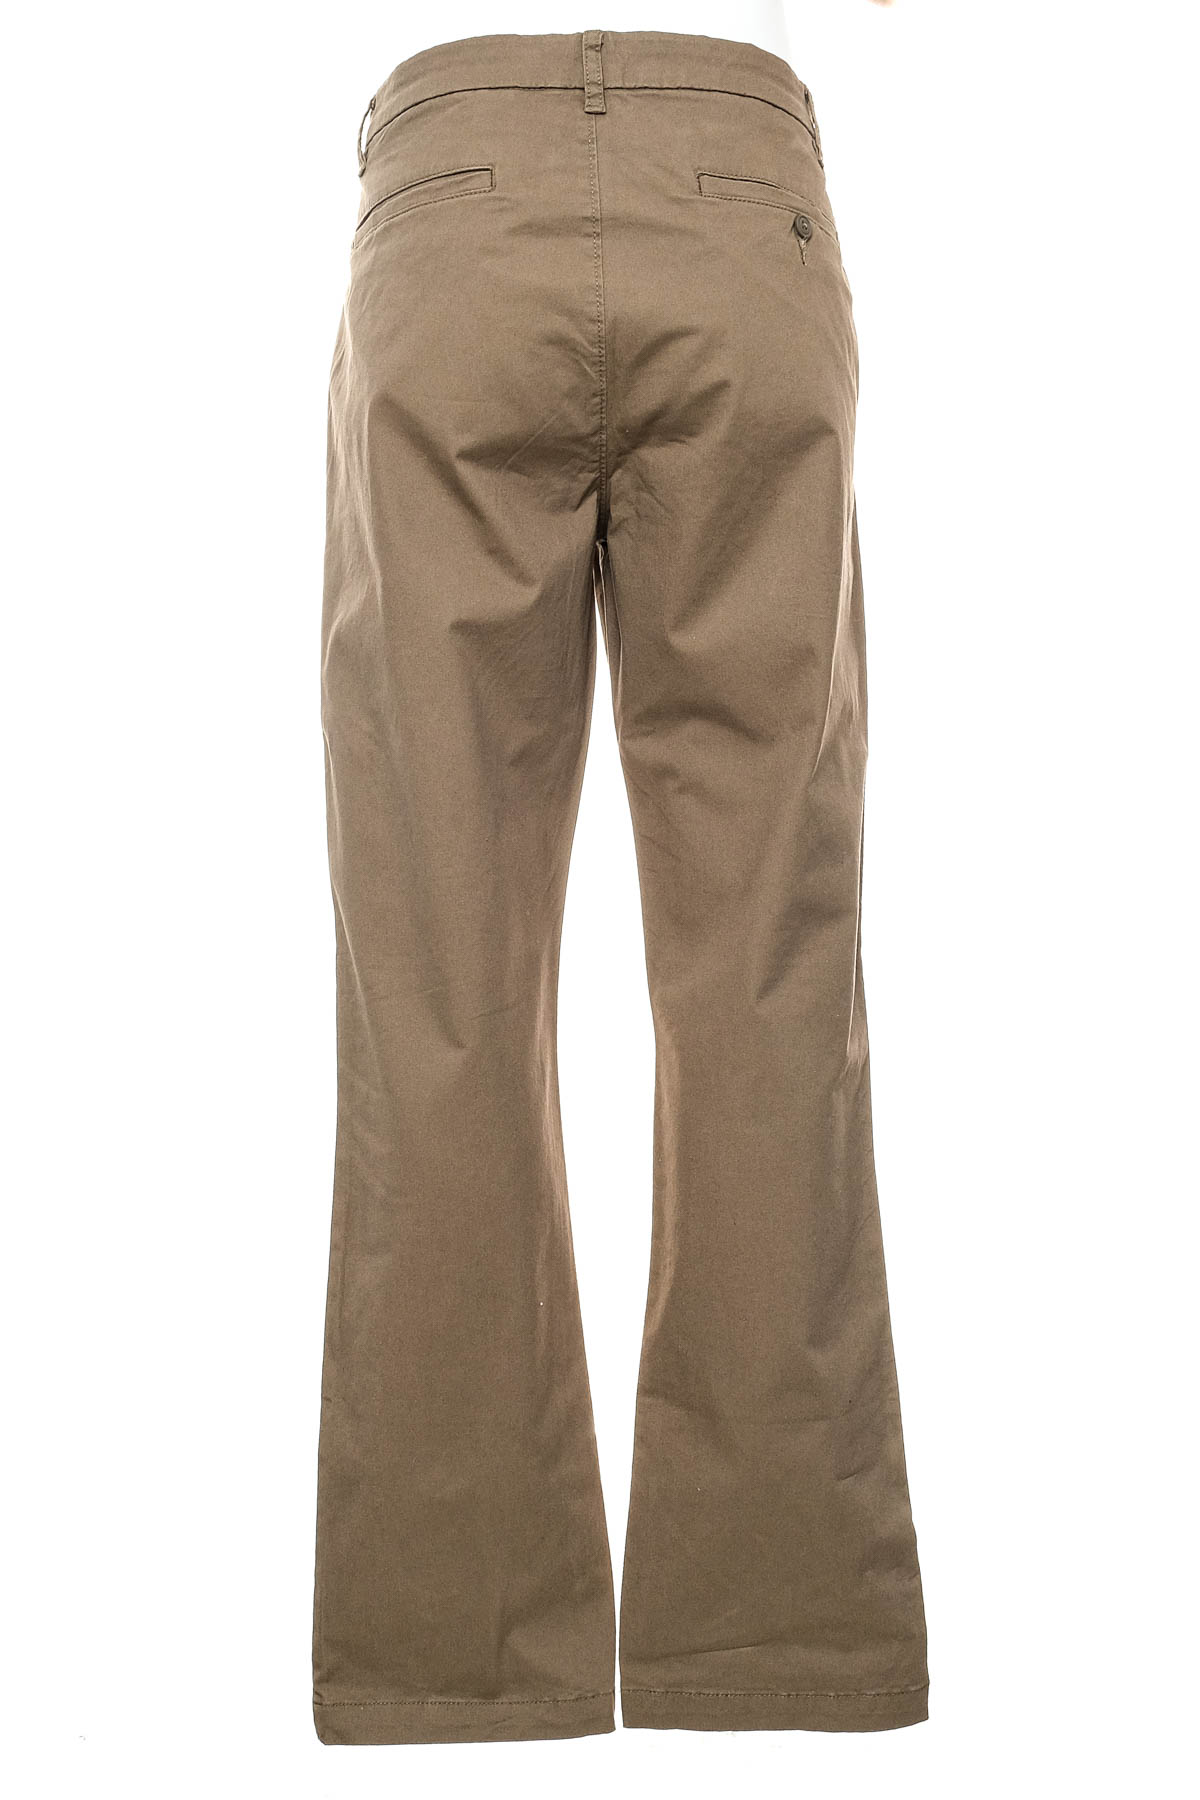 Men's trousers - Dunnes Stores - 1